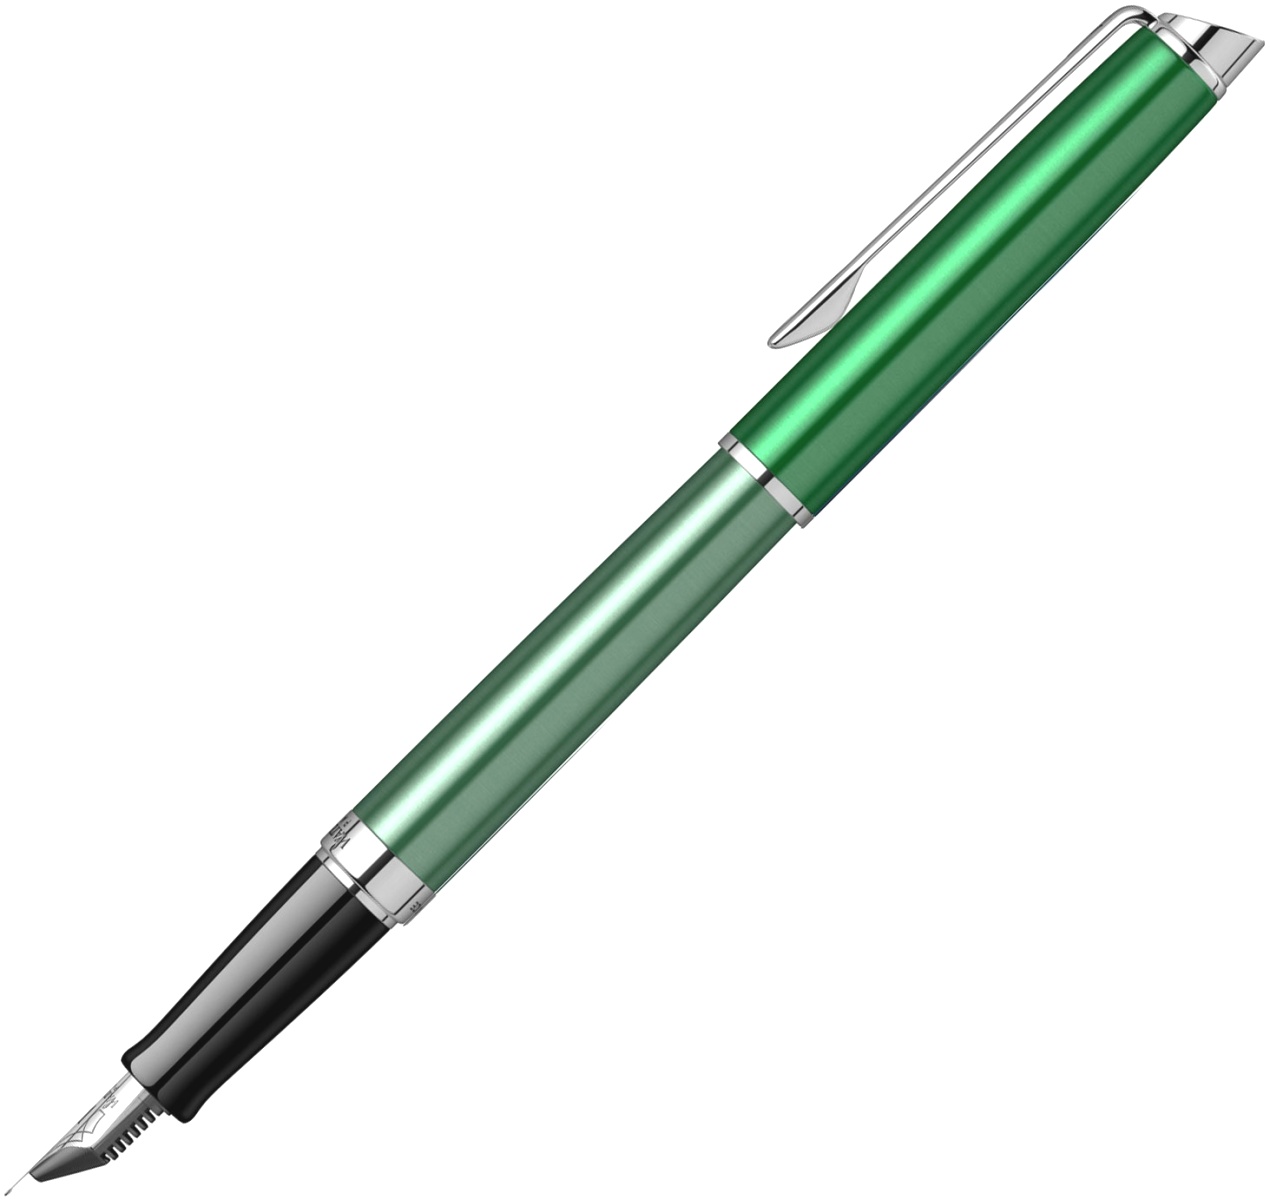  Ручка перьевая Waterman Hemisphere Deluxe 2020, Vineyard Green CT (Перо F), фото 2